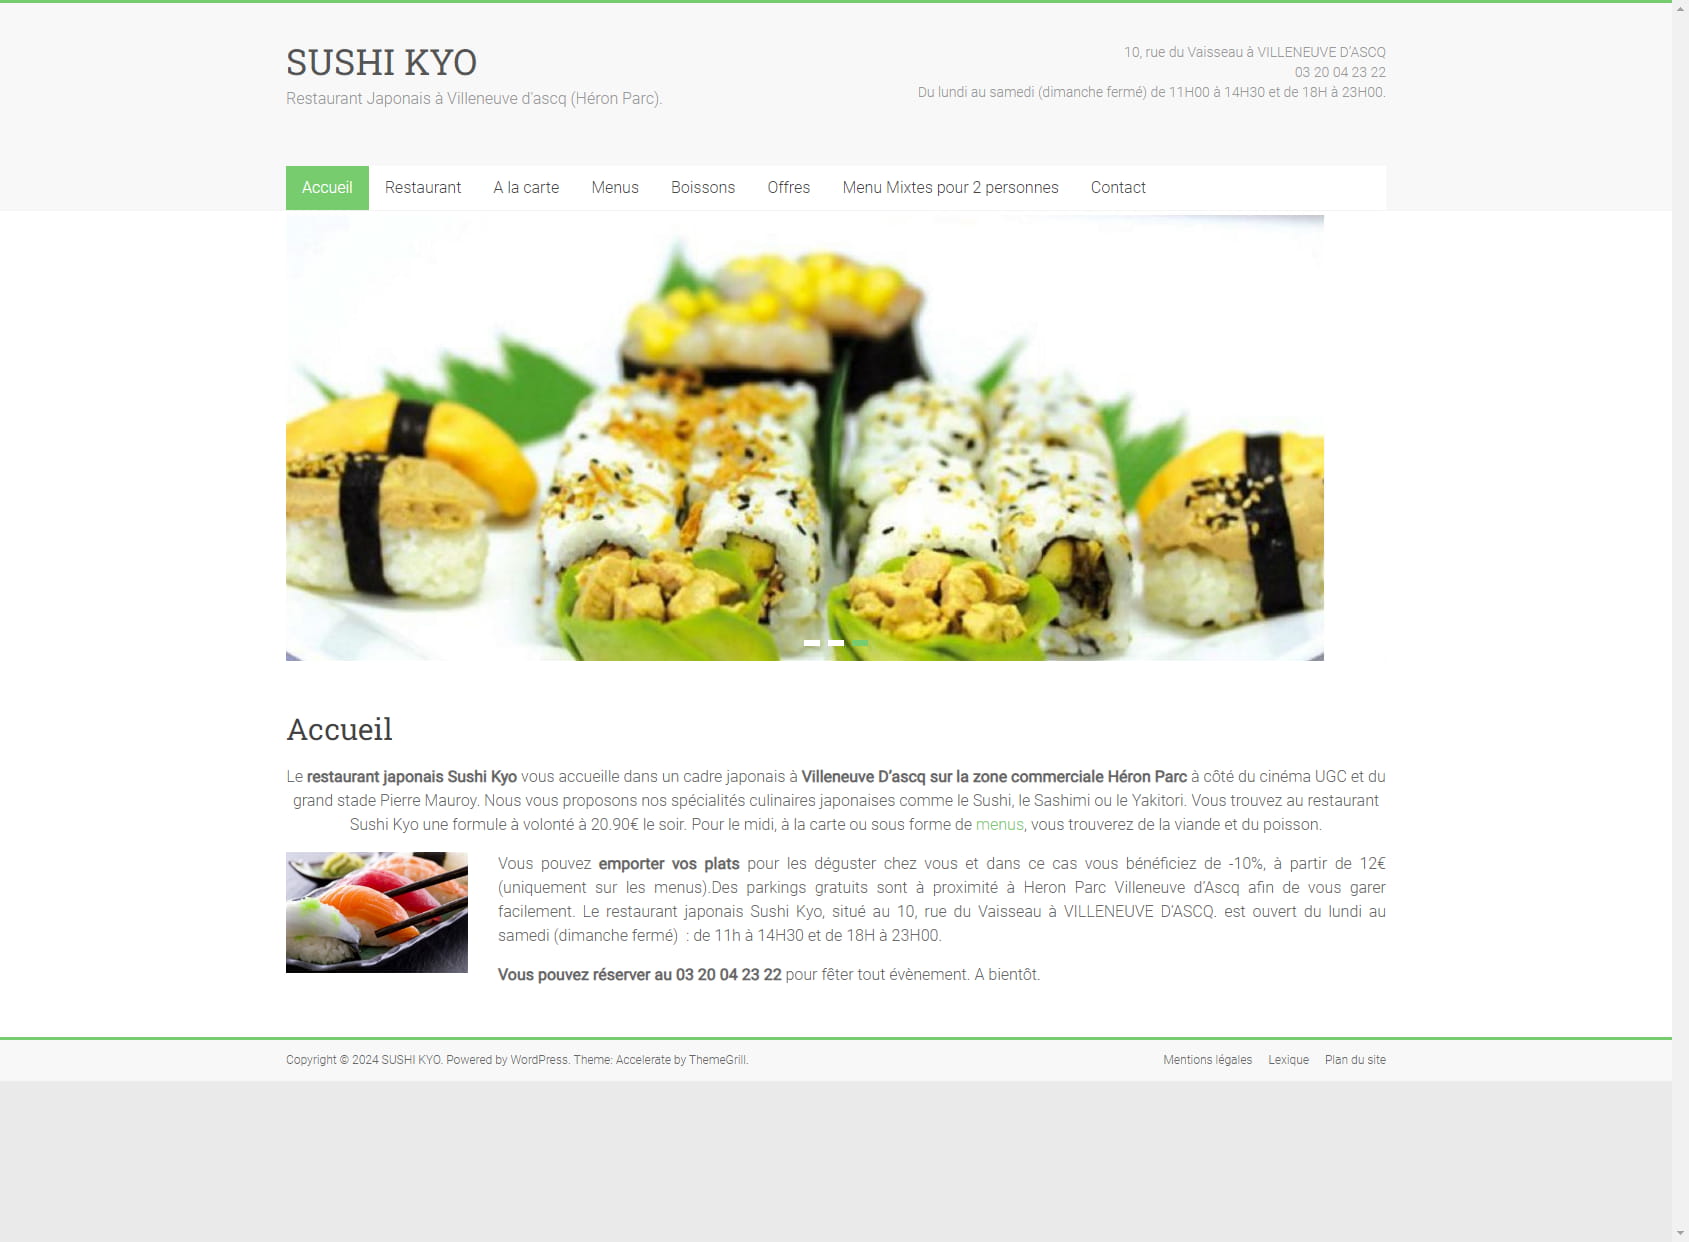 Sushi kyo